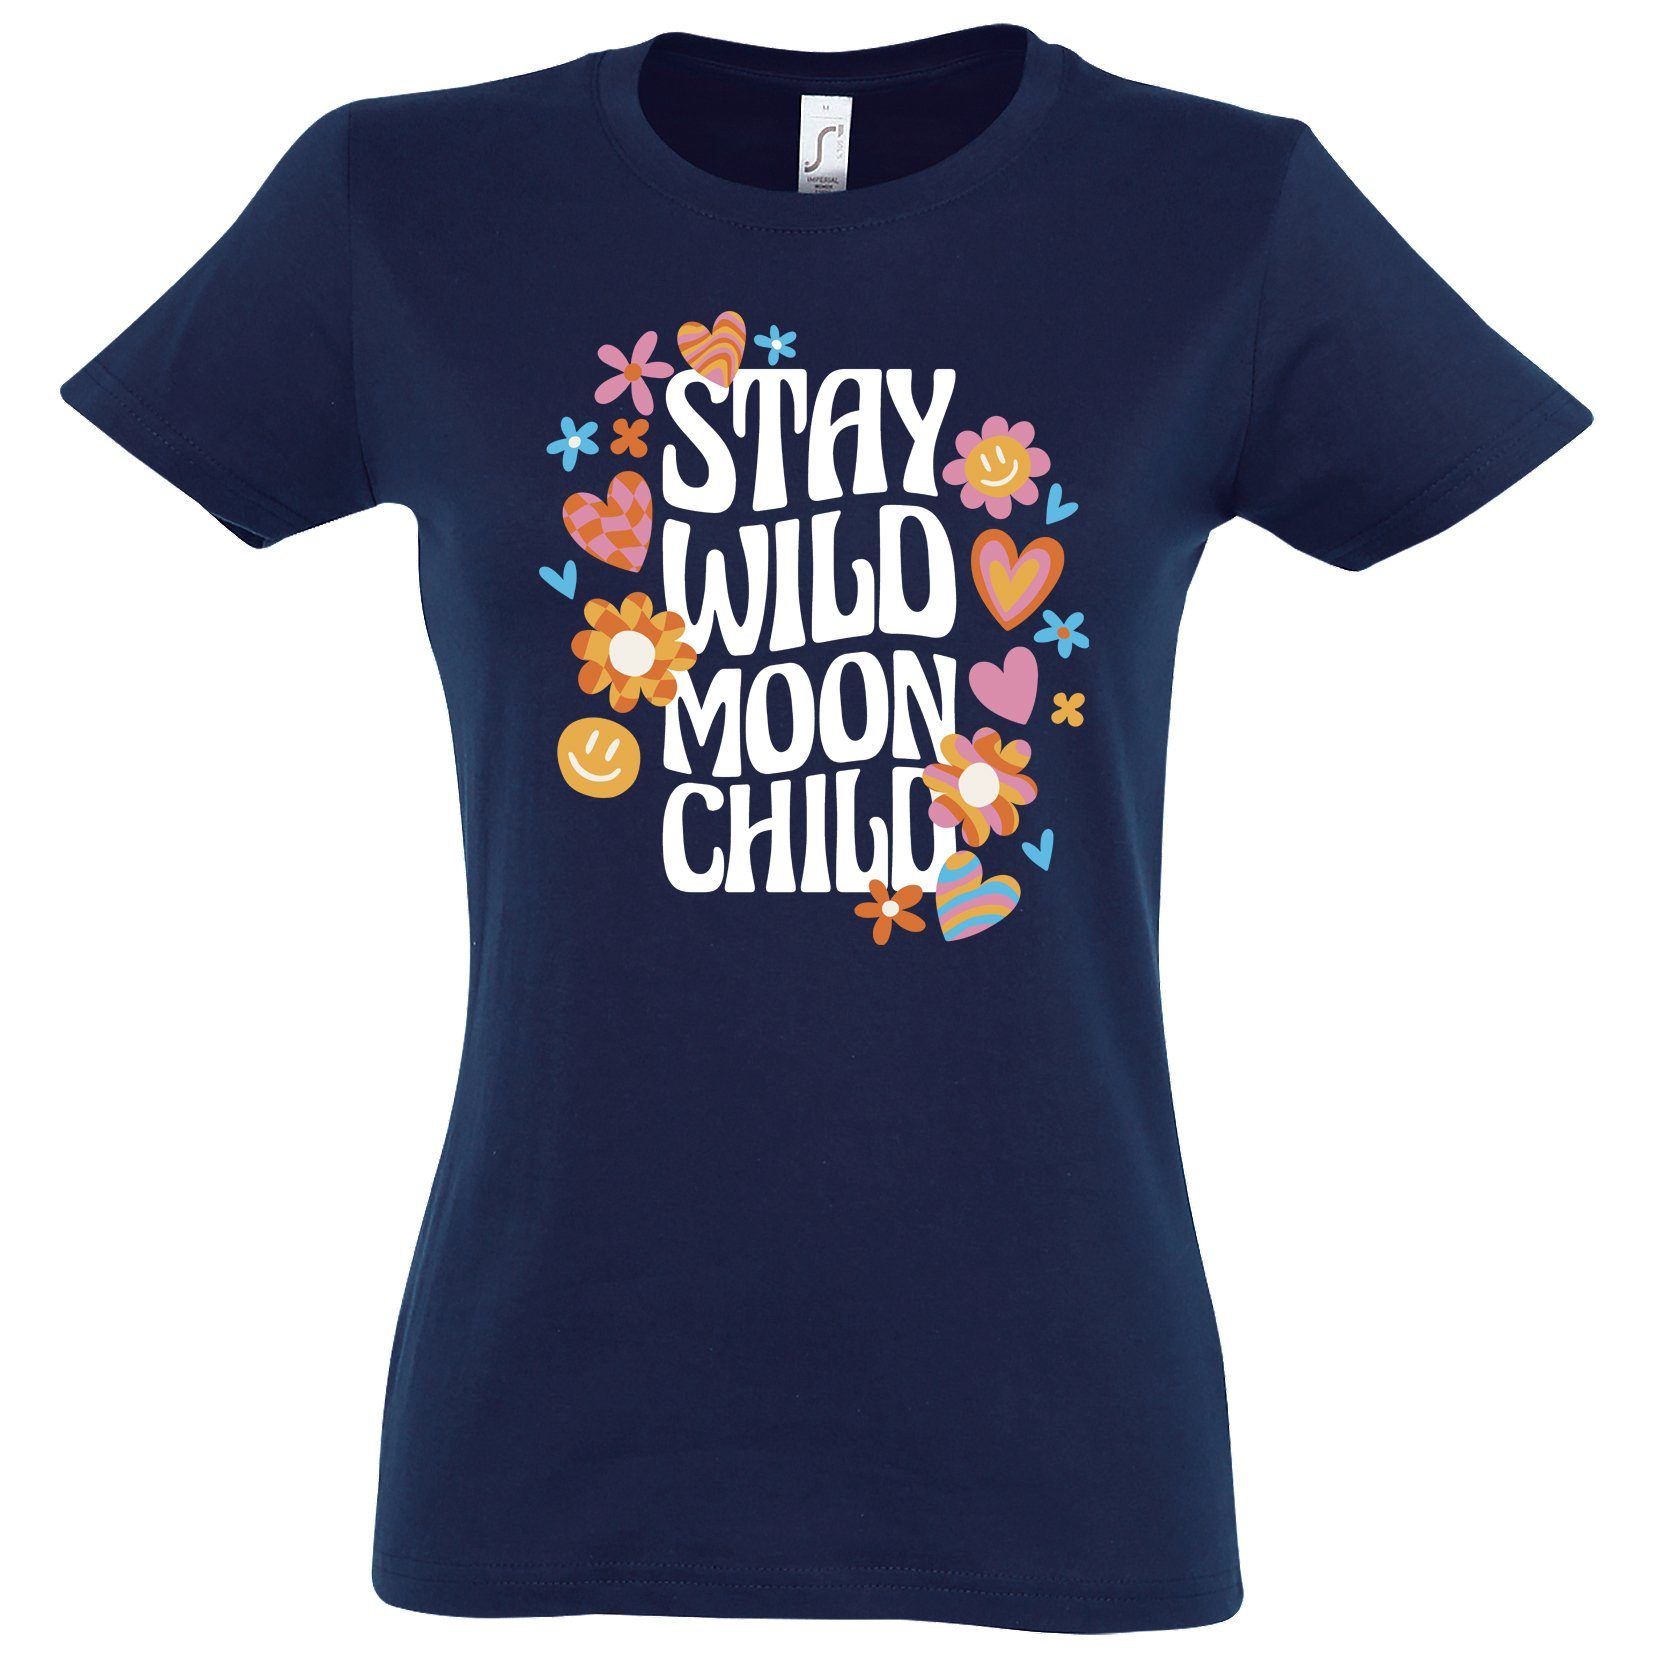 Youth Wild mit "Stay Moon Chill" Frontprint Designz T-Shirt Damen Navyblau trendigem Shirt